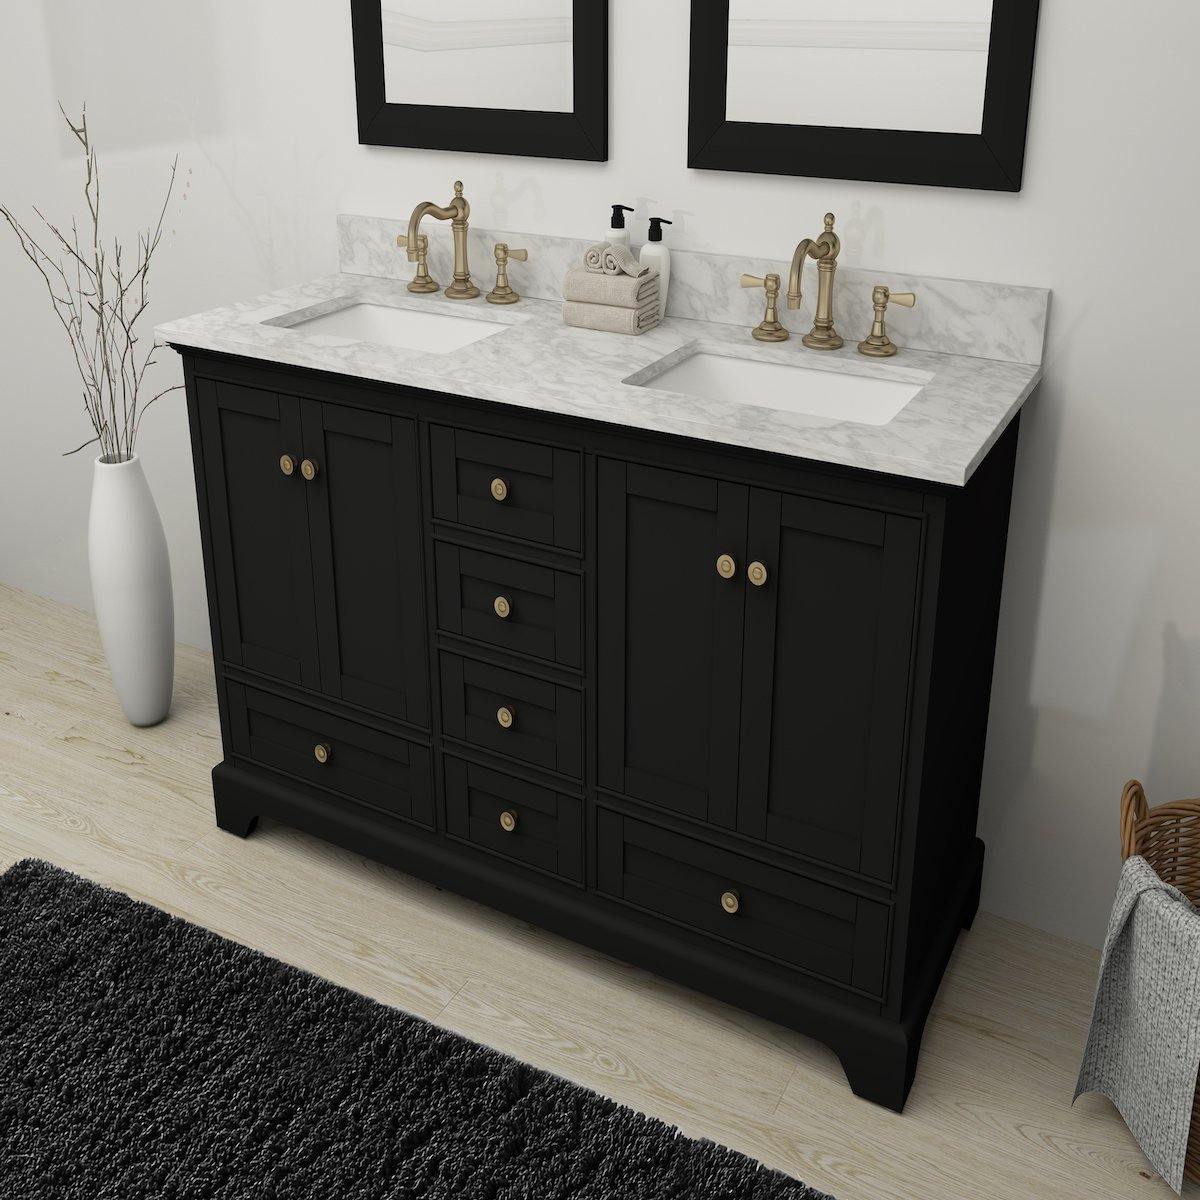 Ancerre Designs Audrey 60 Inch Onyx Black Double Vanity in Bathroom